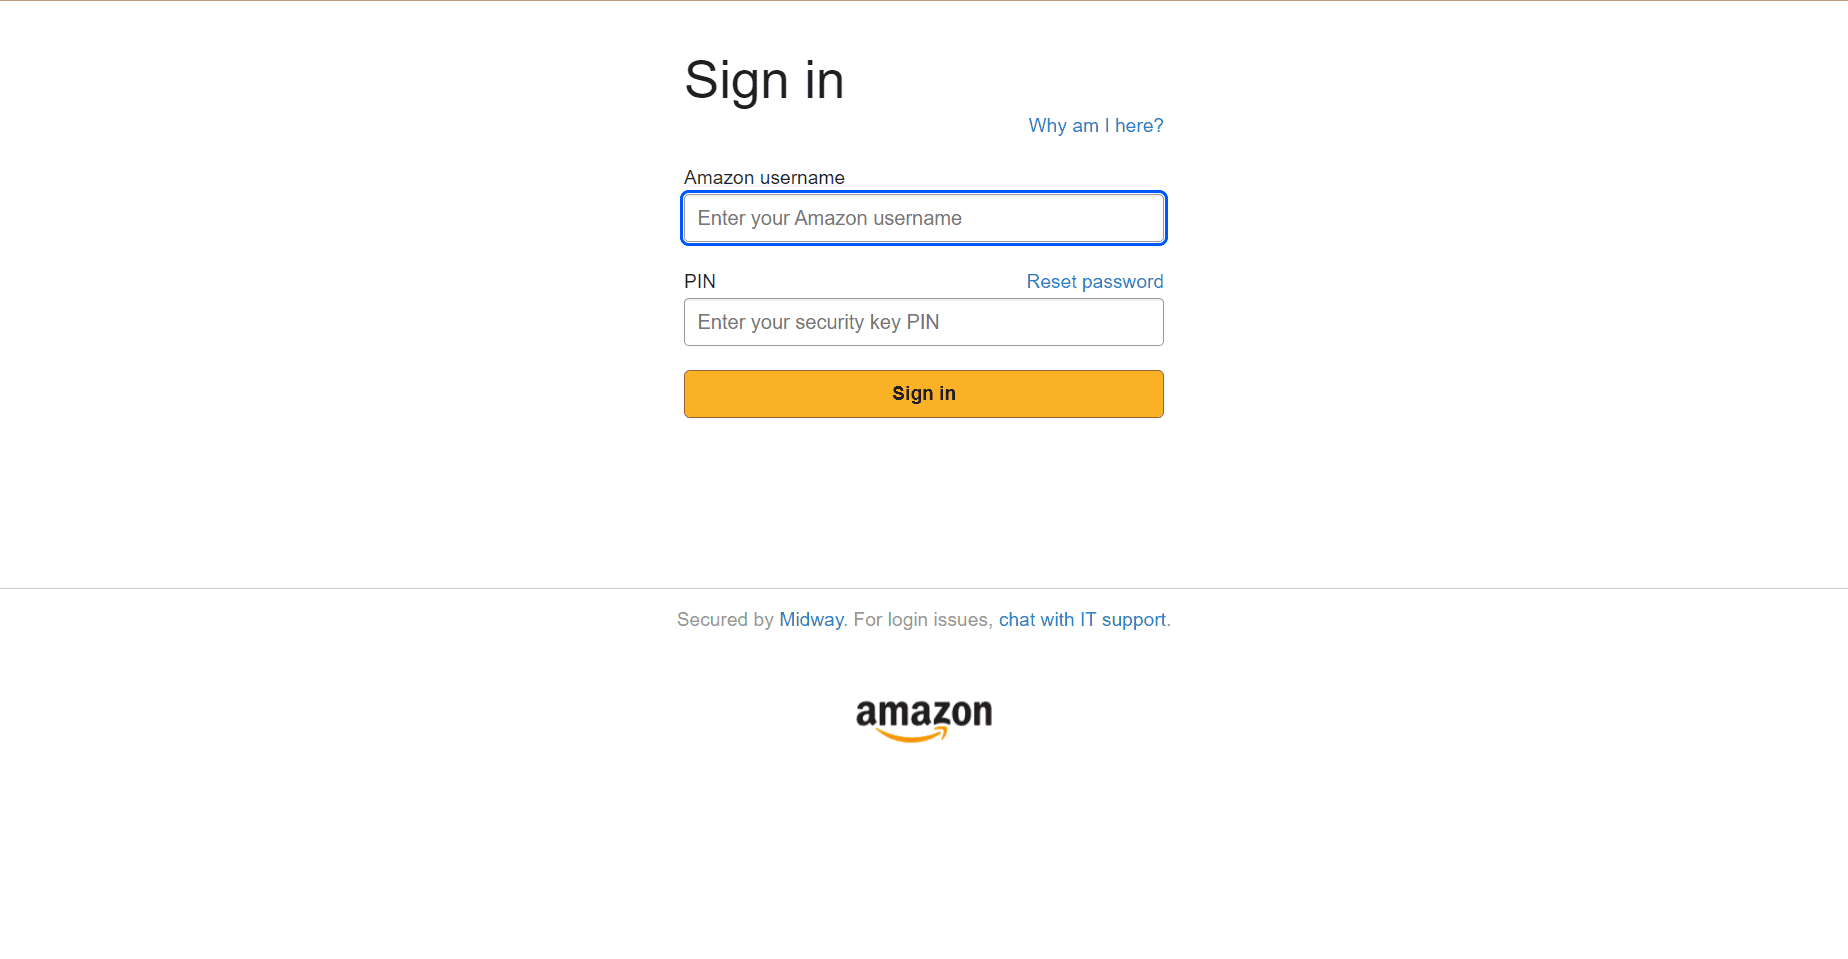 Amazon.com AD FS sign-in page